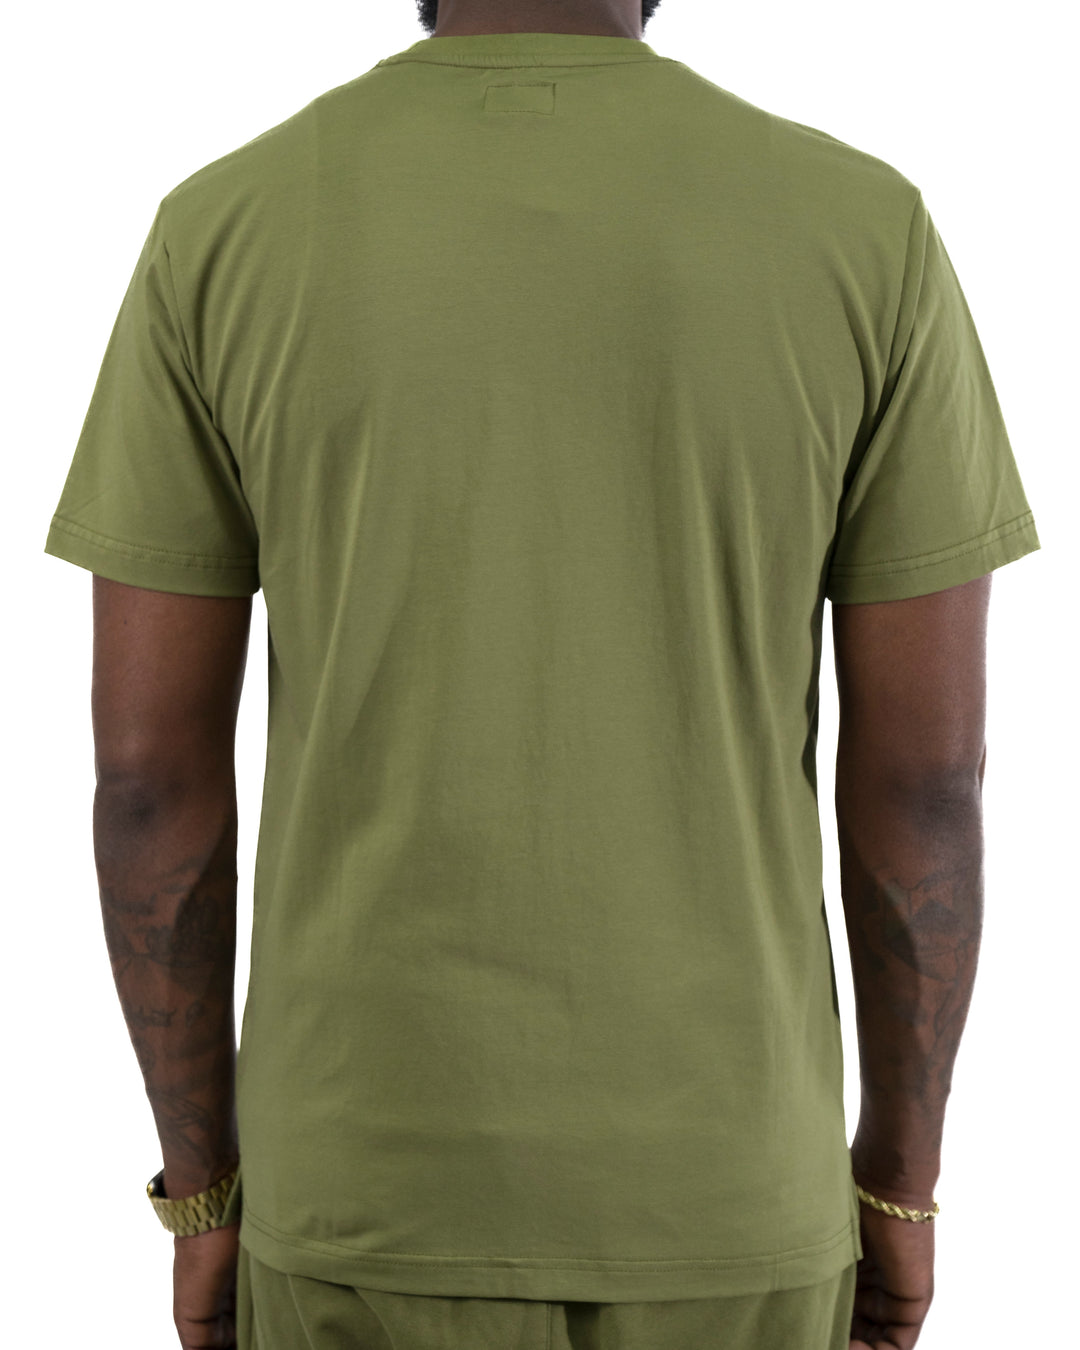 Essential Olive Classic Leaf Shirt